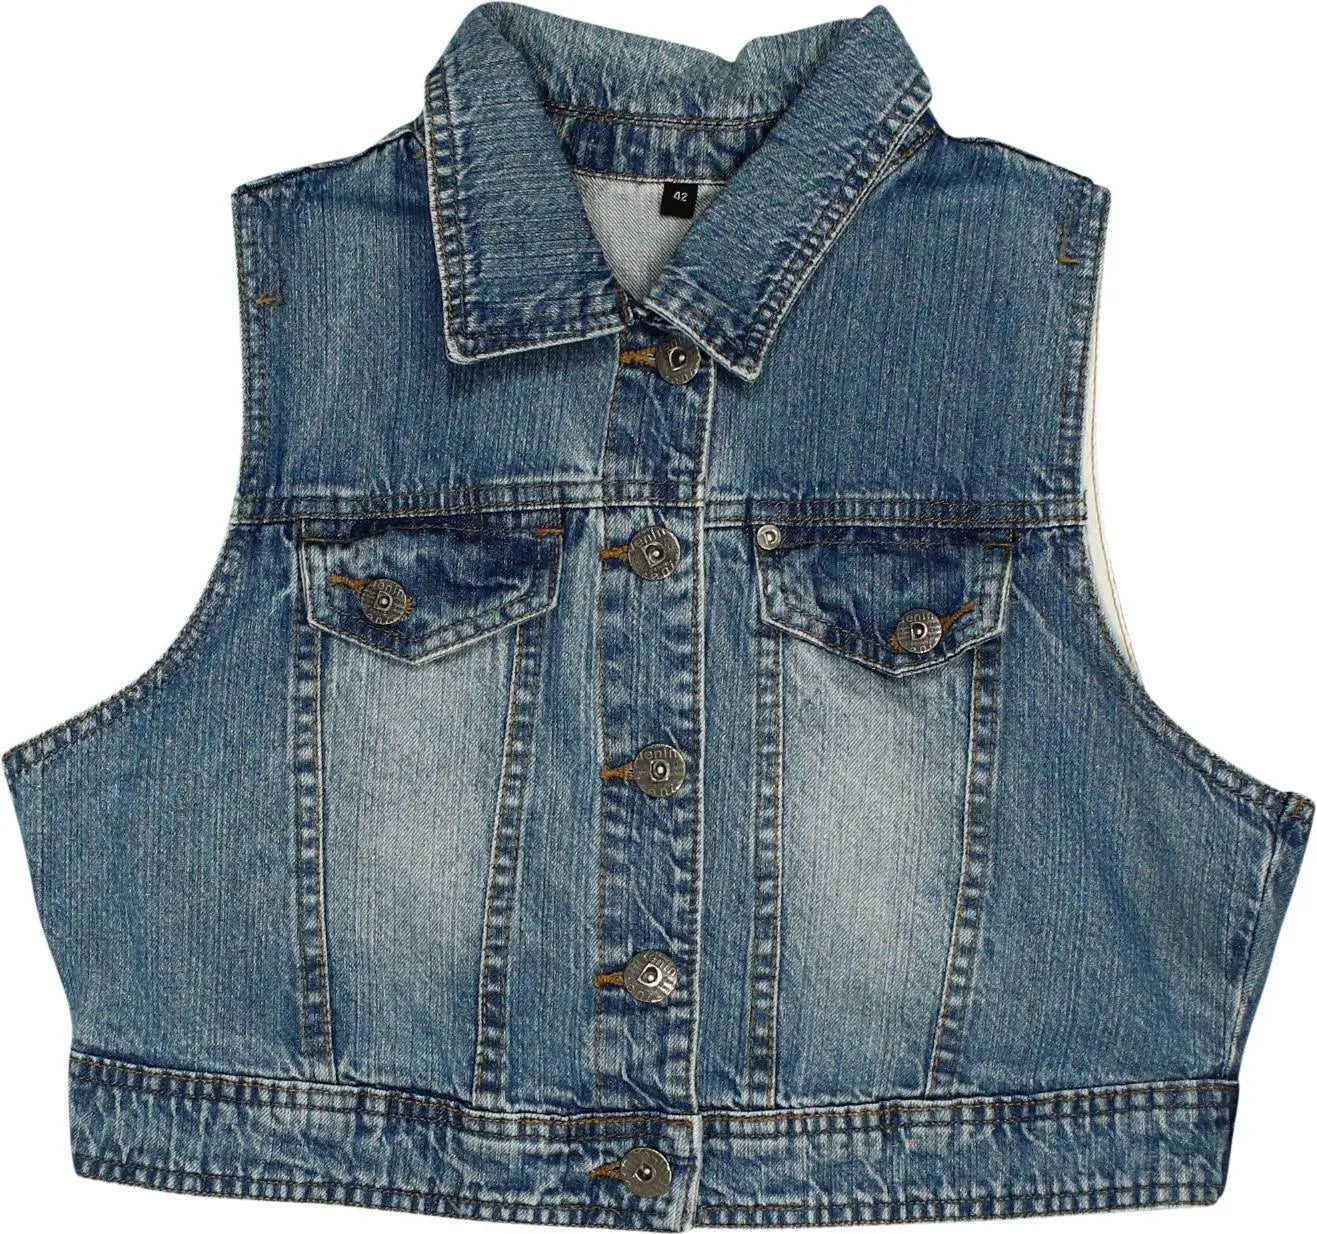 Unknown - Denim Vest- ThriftTale.com - Vintage and second handclothing